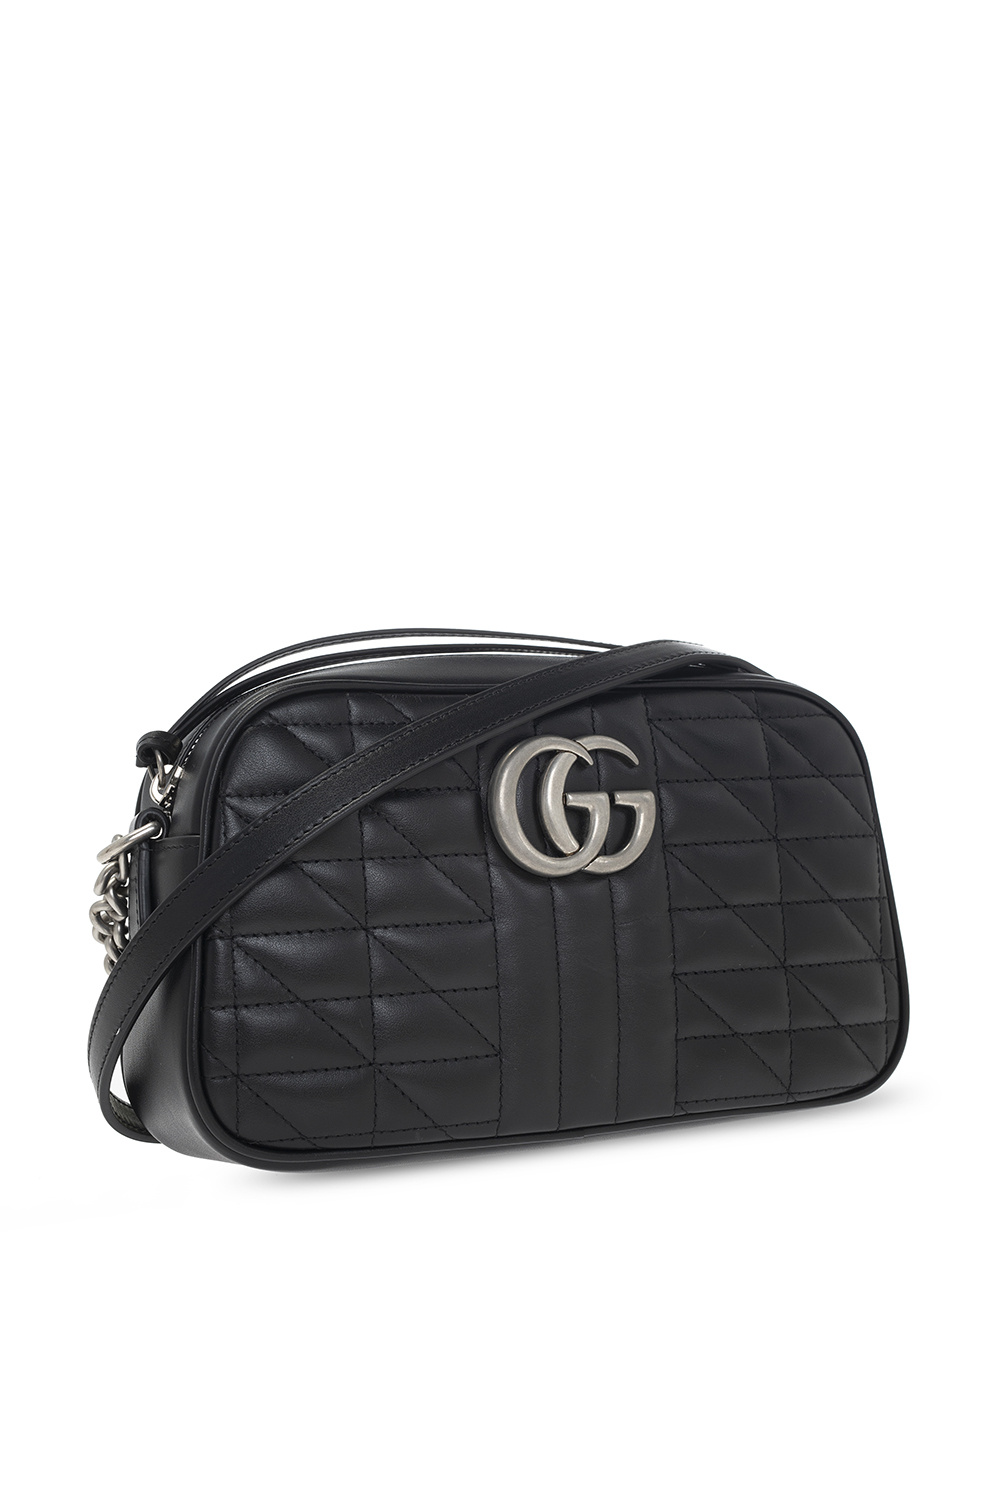 Dakota Johnson With Louis Vuitton's Messenger Bag and Gucci's